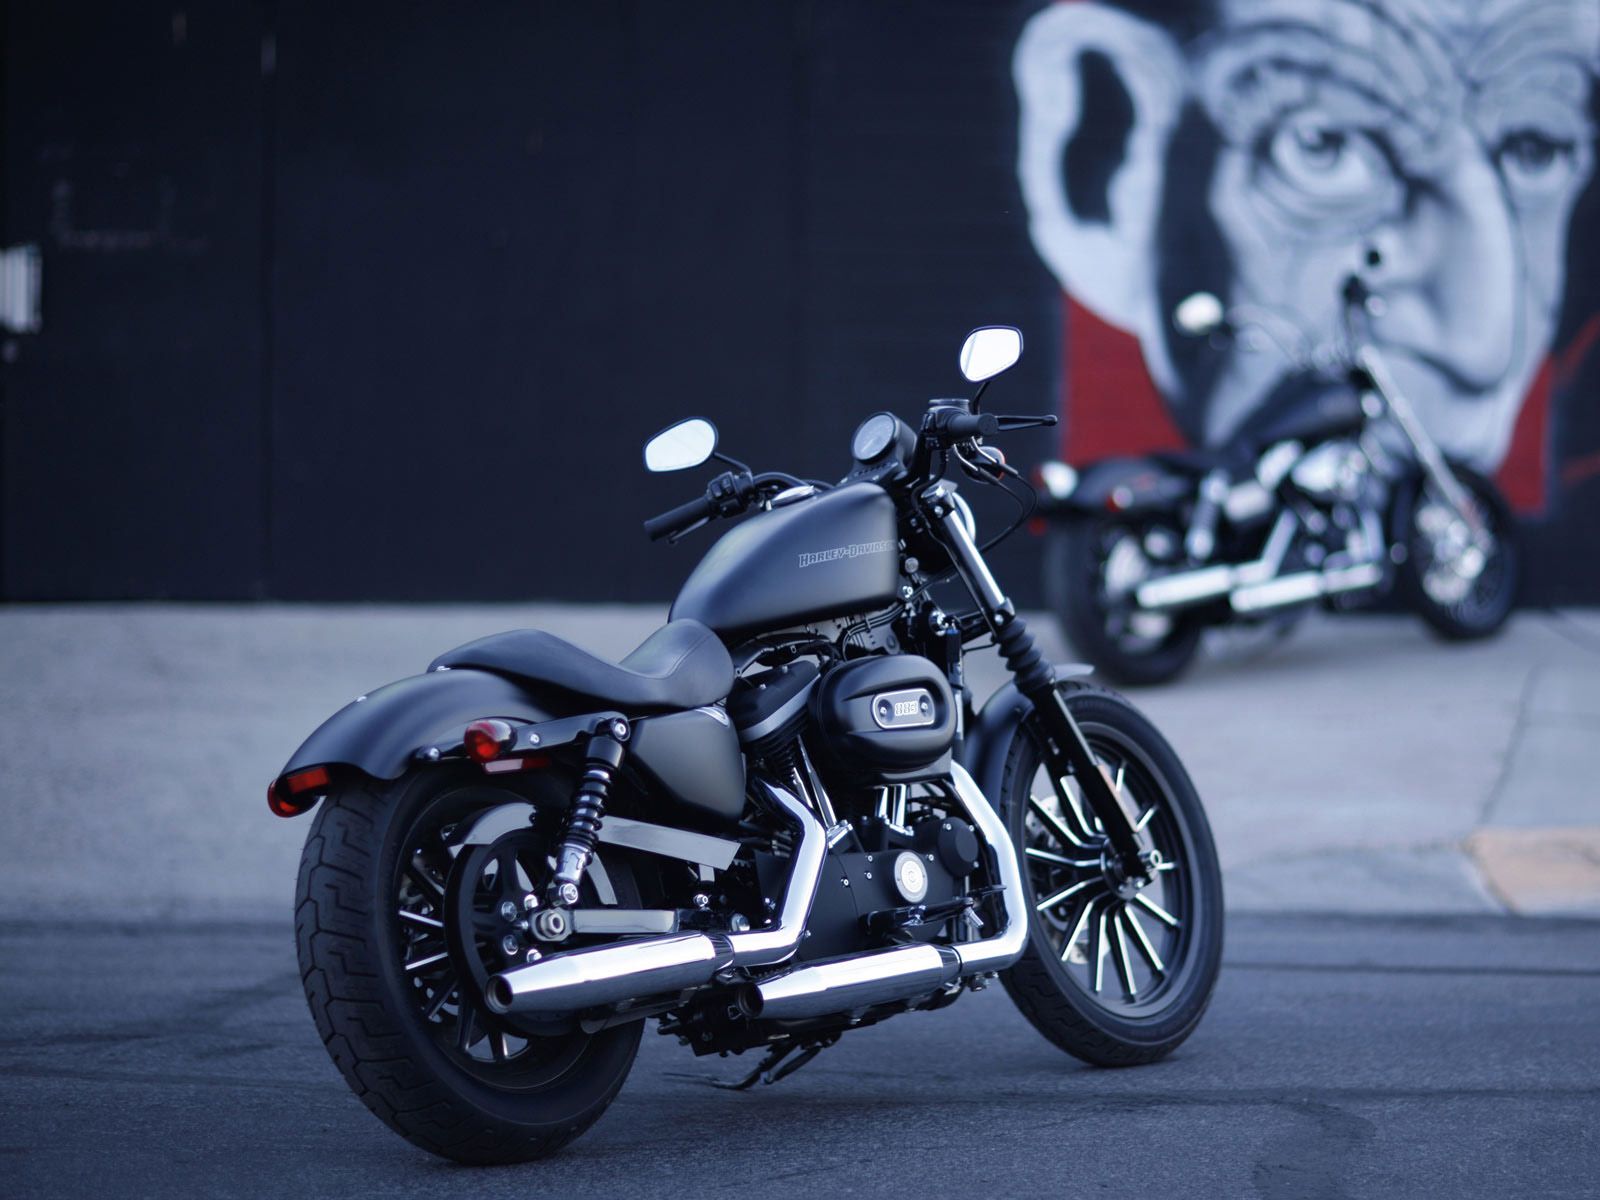 Harley Davidson Bikes Wallpaper Group .wallpaper House.com